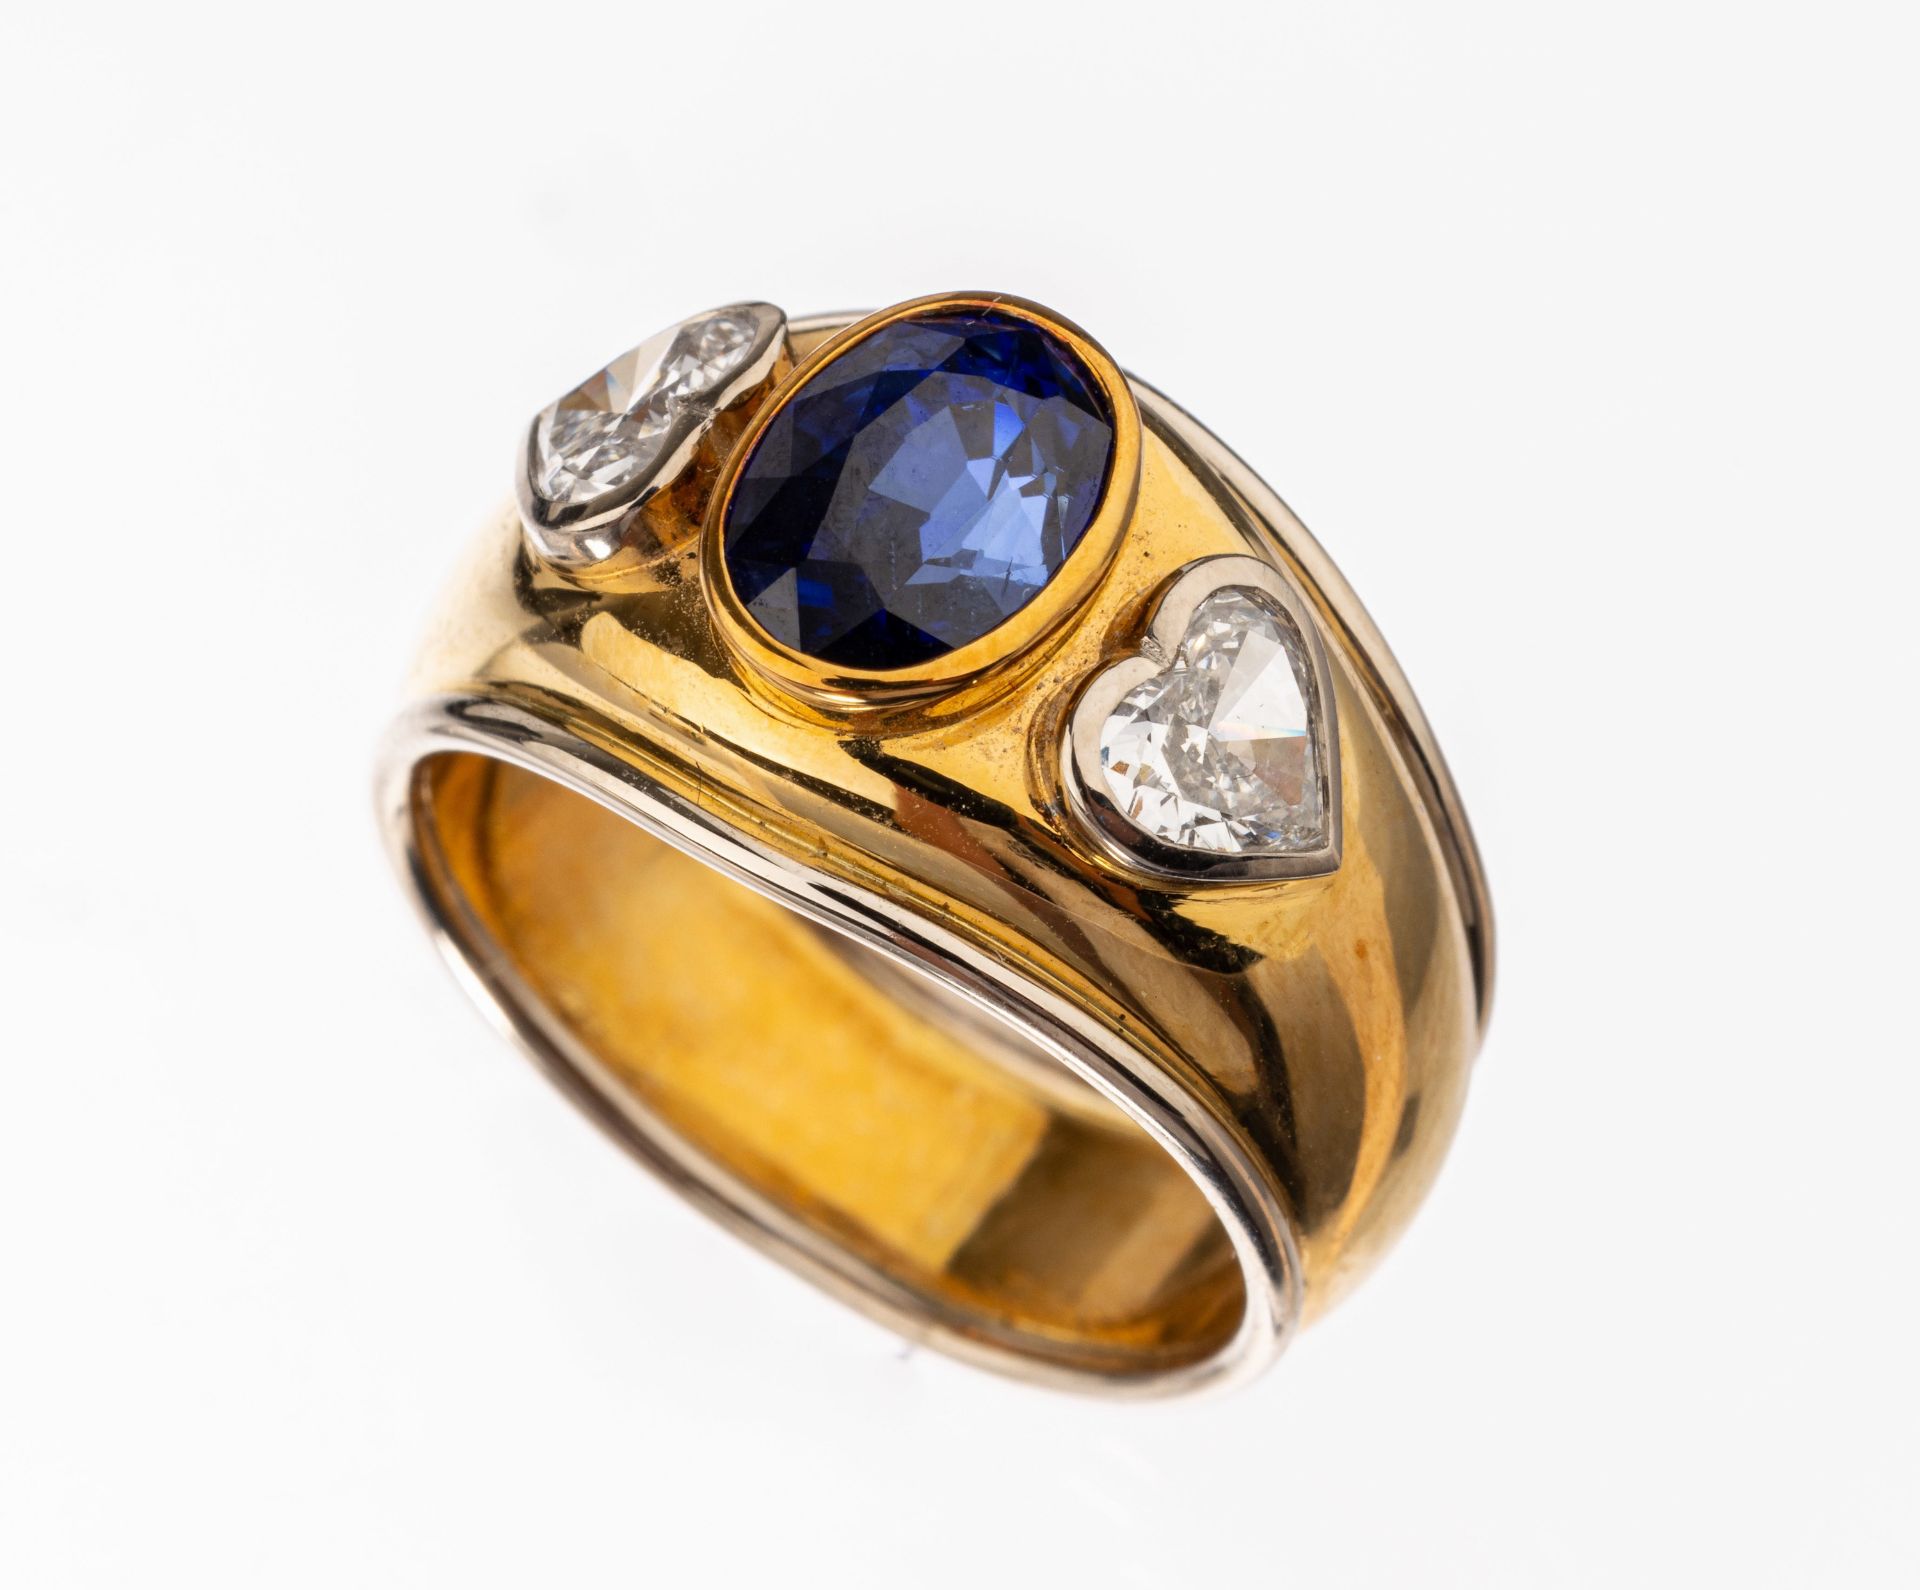 18 kt Gold Saphir-Diamant-Ring, GG 750/000,mittig